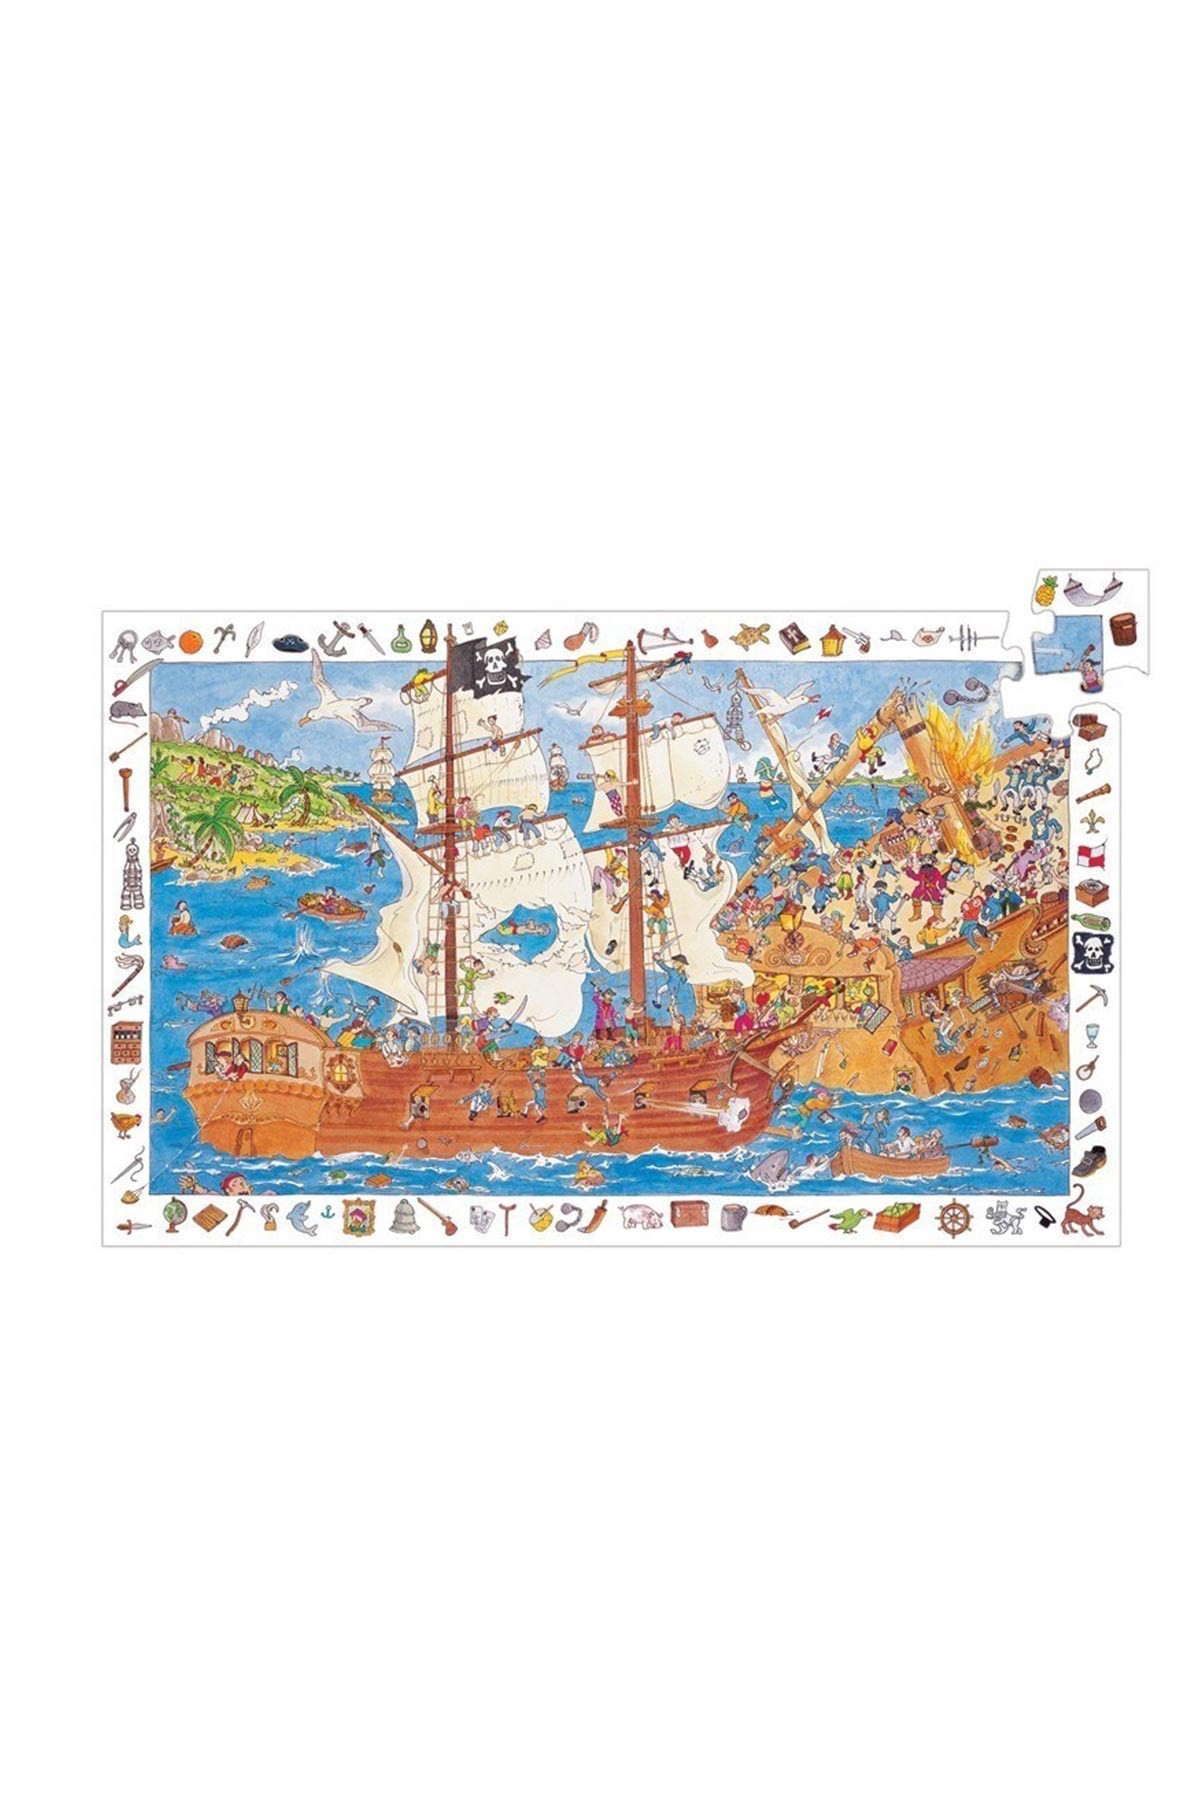 Djeco Puzzle / Pirates - 100 Pcs